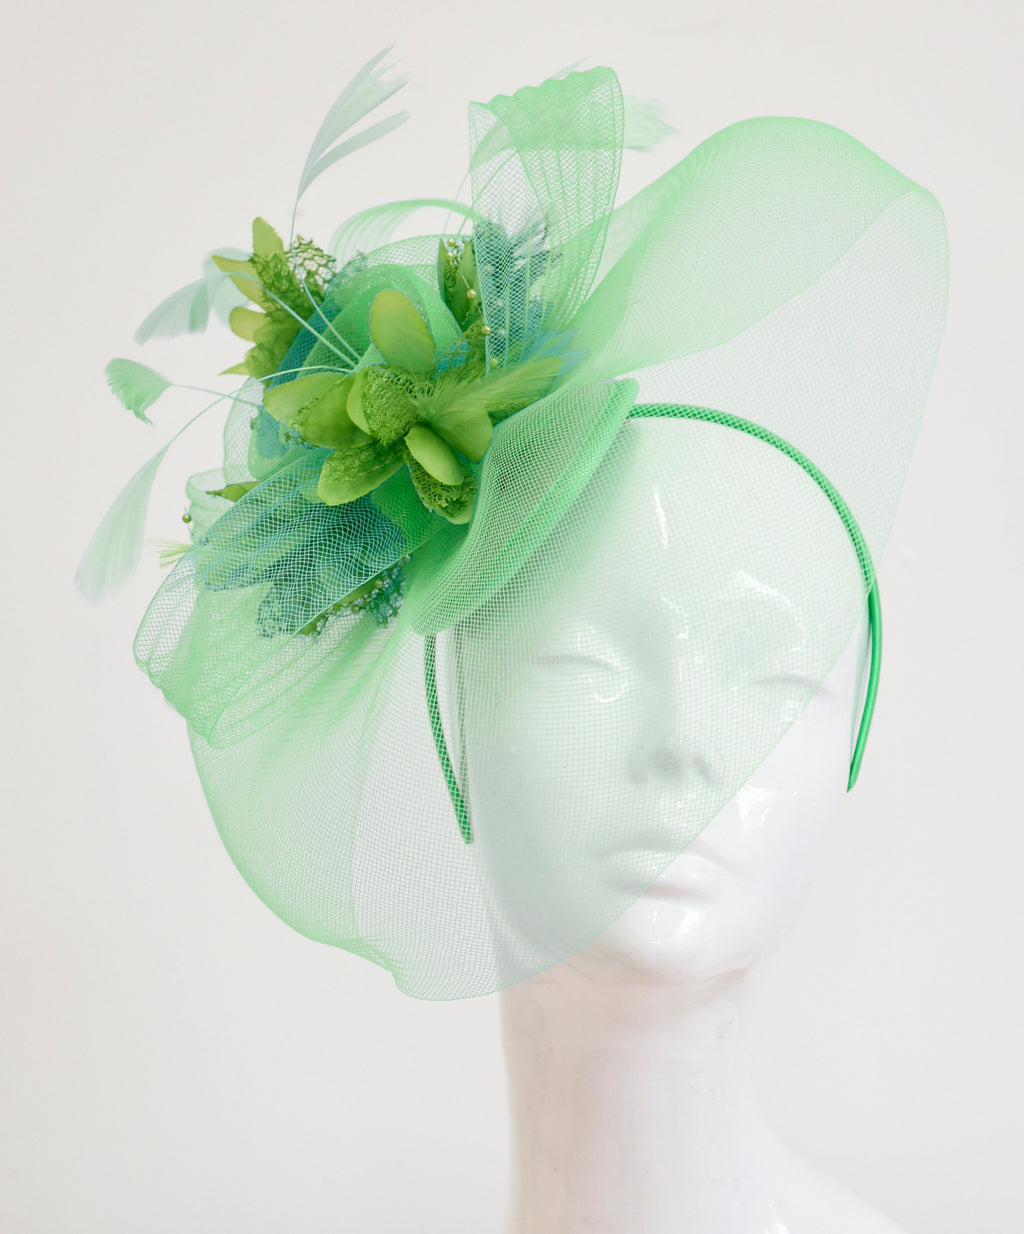 Caprilite Big Mint Green and Lime Fascinator Hat Veil Net Ascot Derby Races Wedding Headband Feather